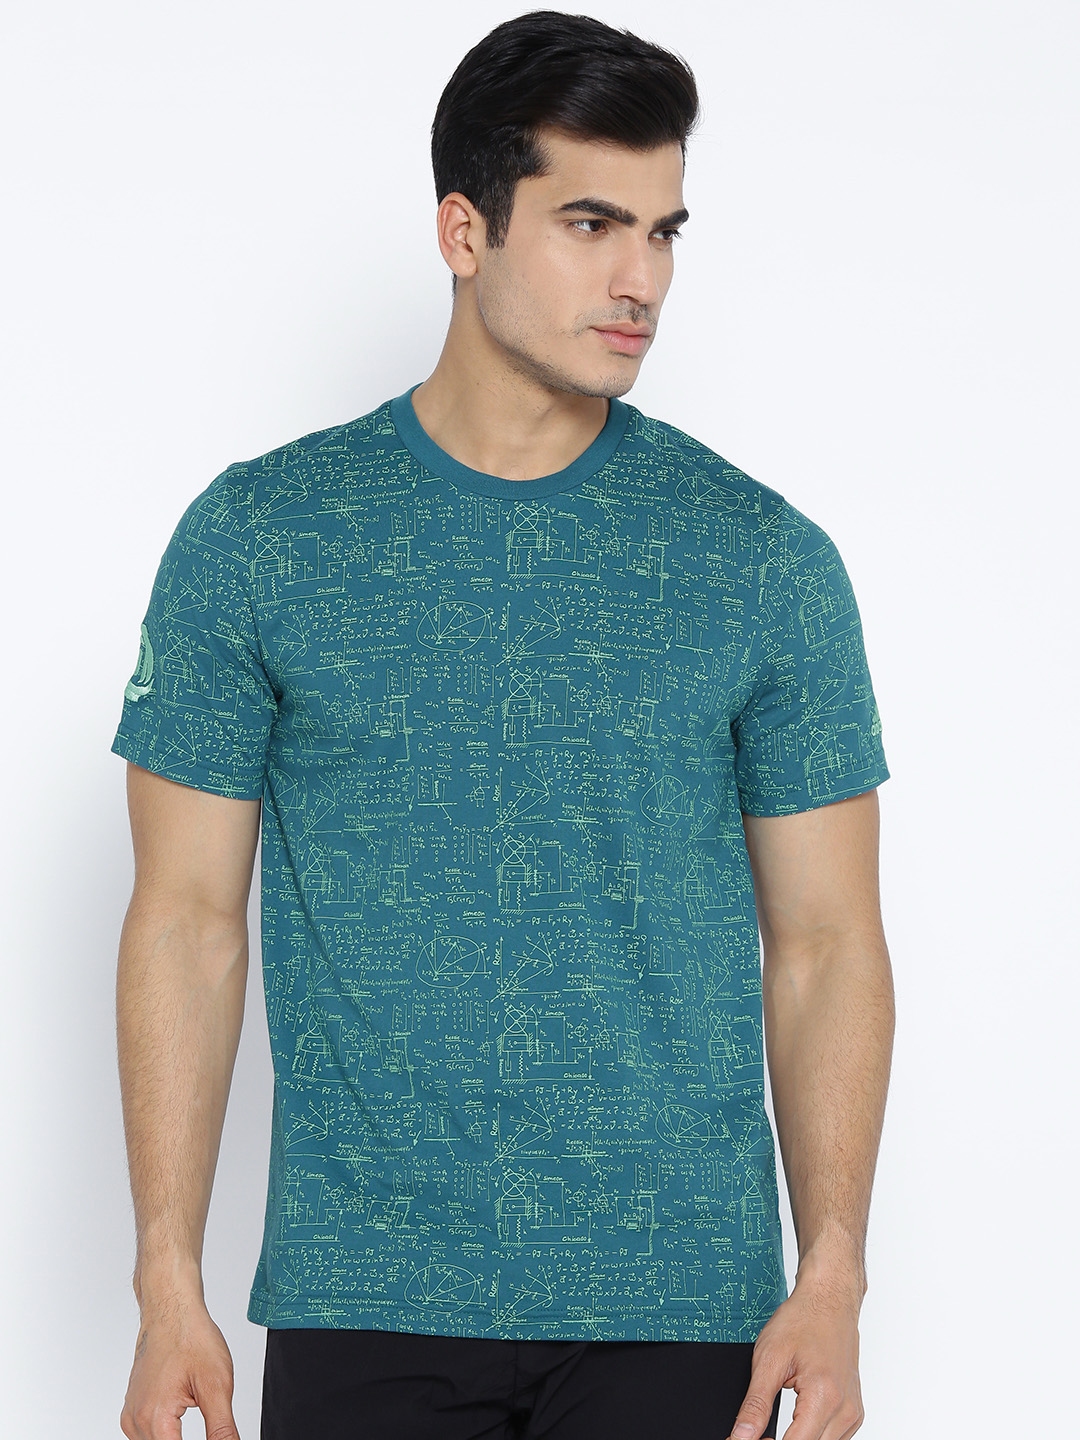 Buy ADIDAS Men Teal Blue Printed Basketball T Shirt - Tshirts for Men ...